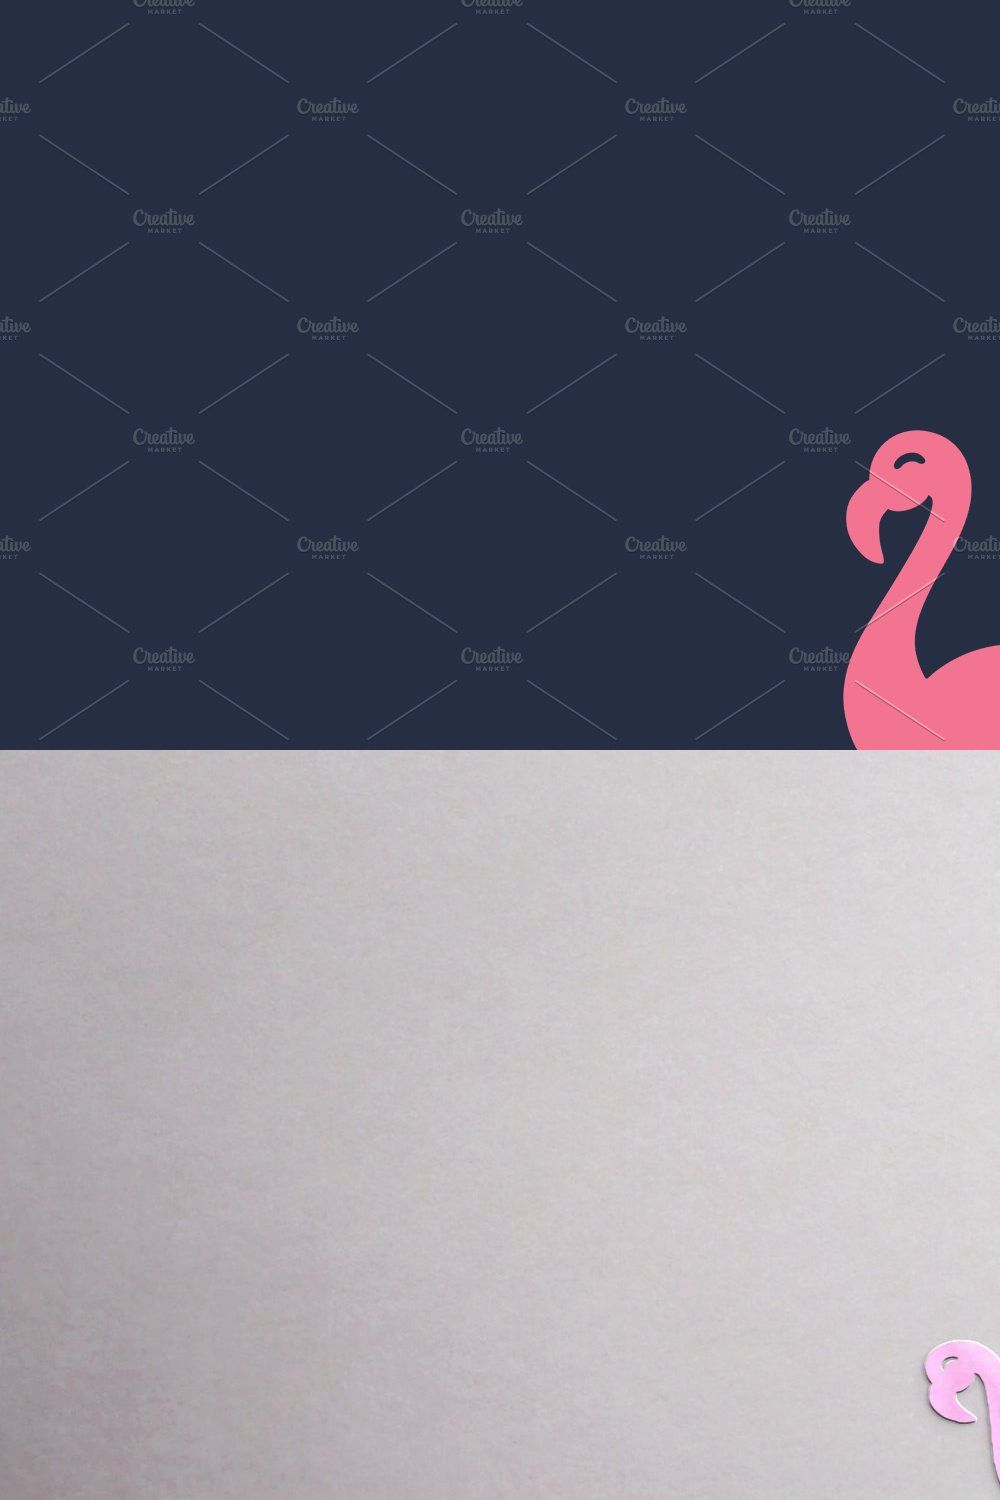 Flamingo pinterest preview image.